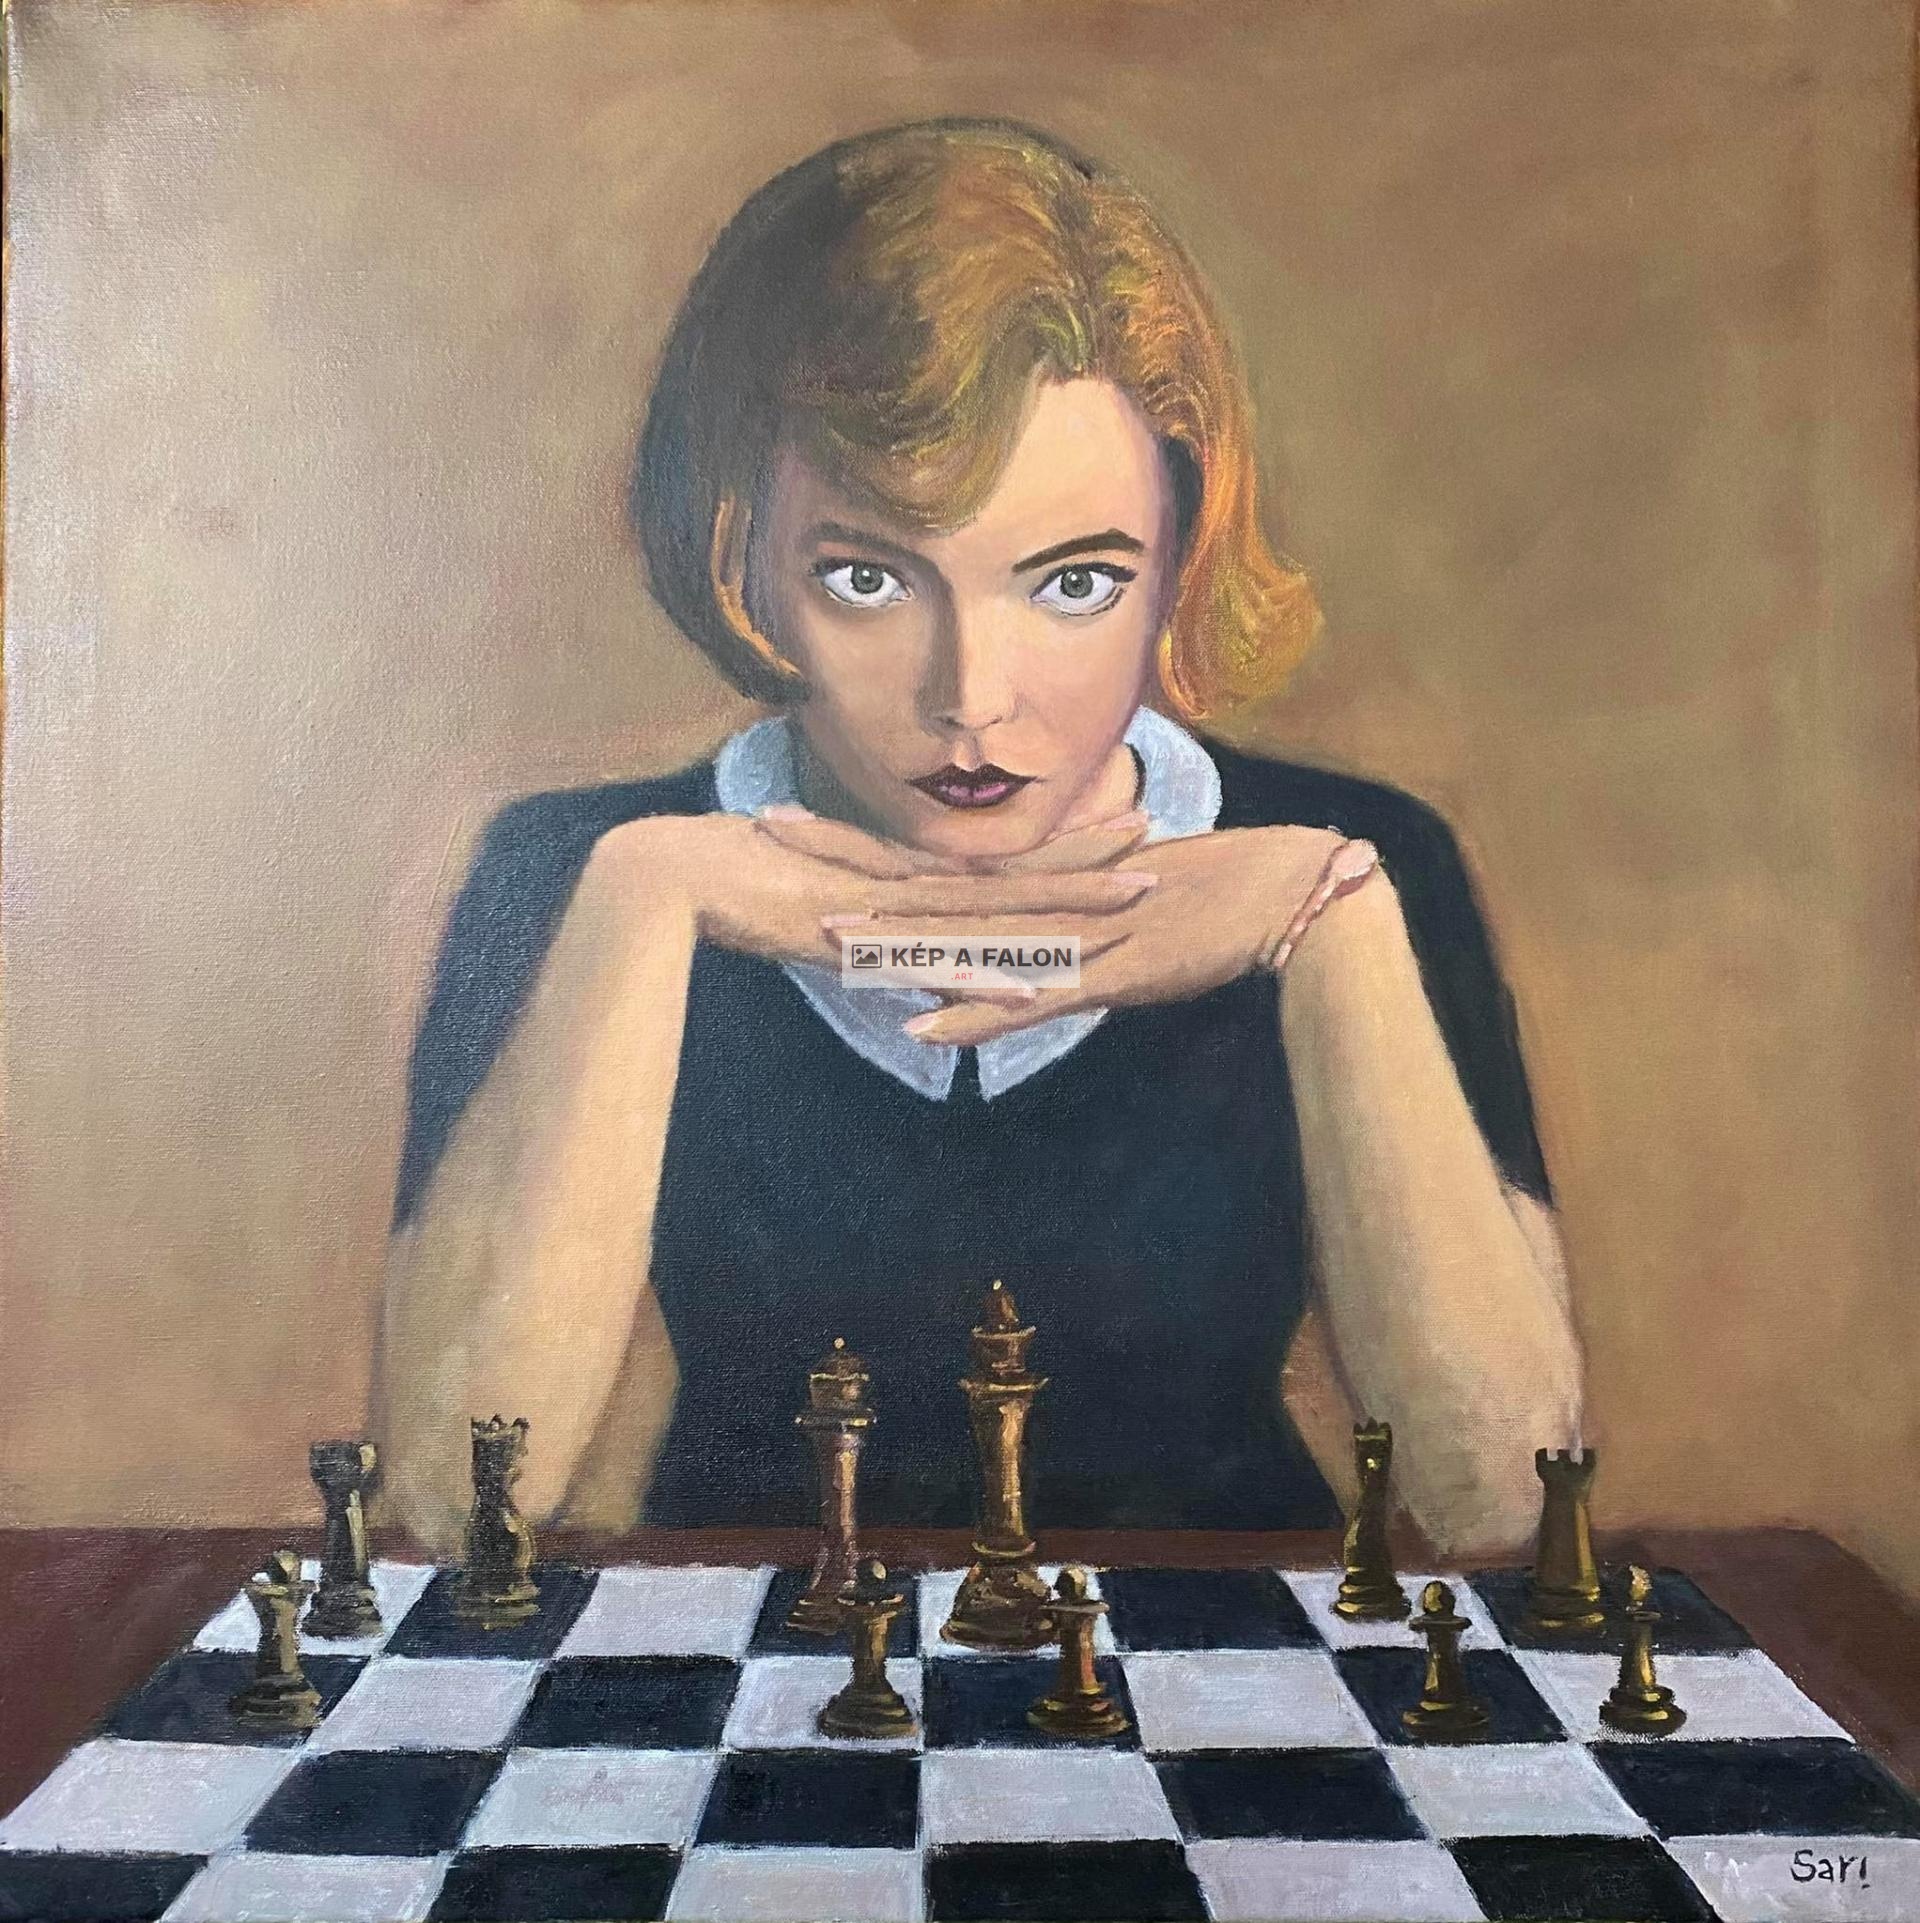 The Queen s Gambit by: Sari Osman | 2021, olaj festmény